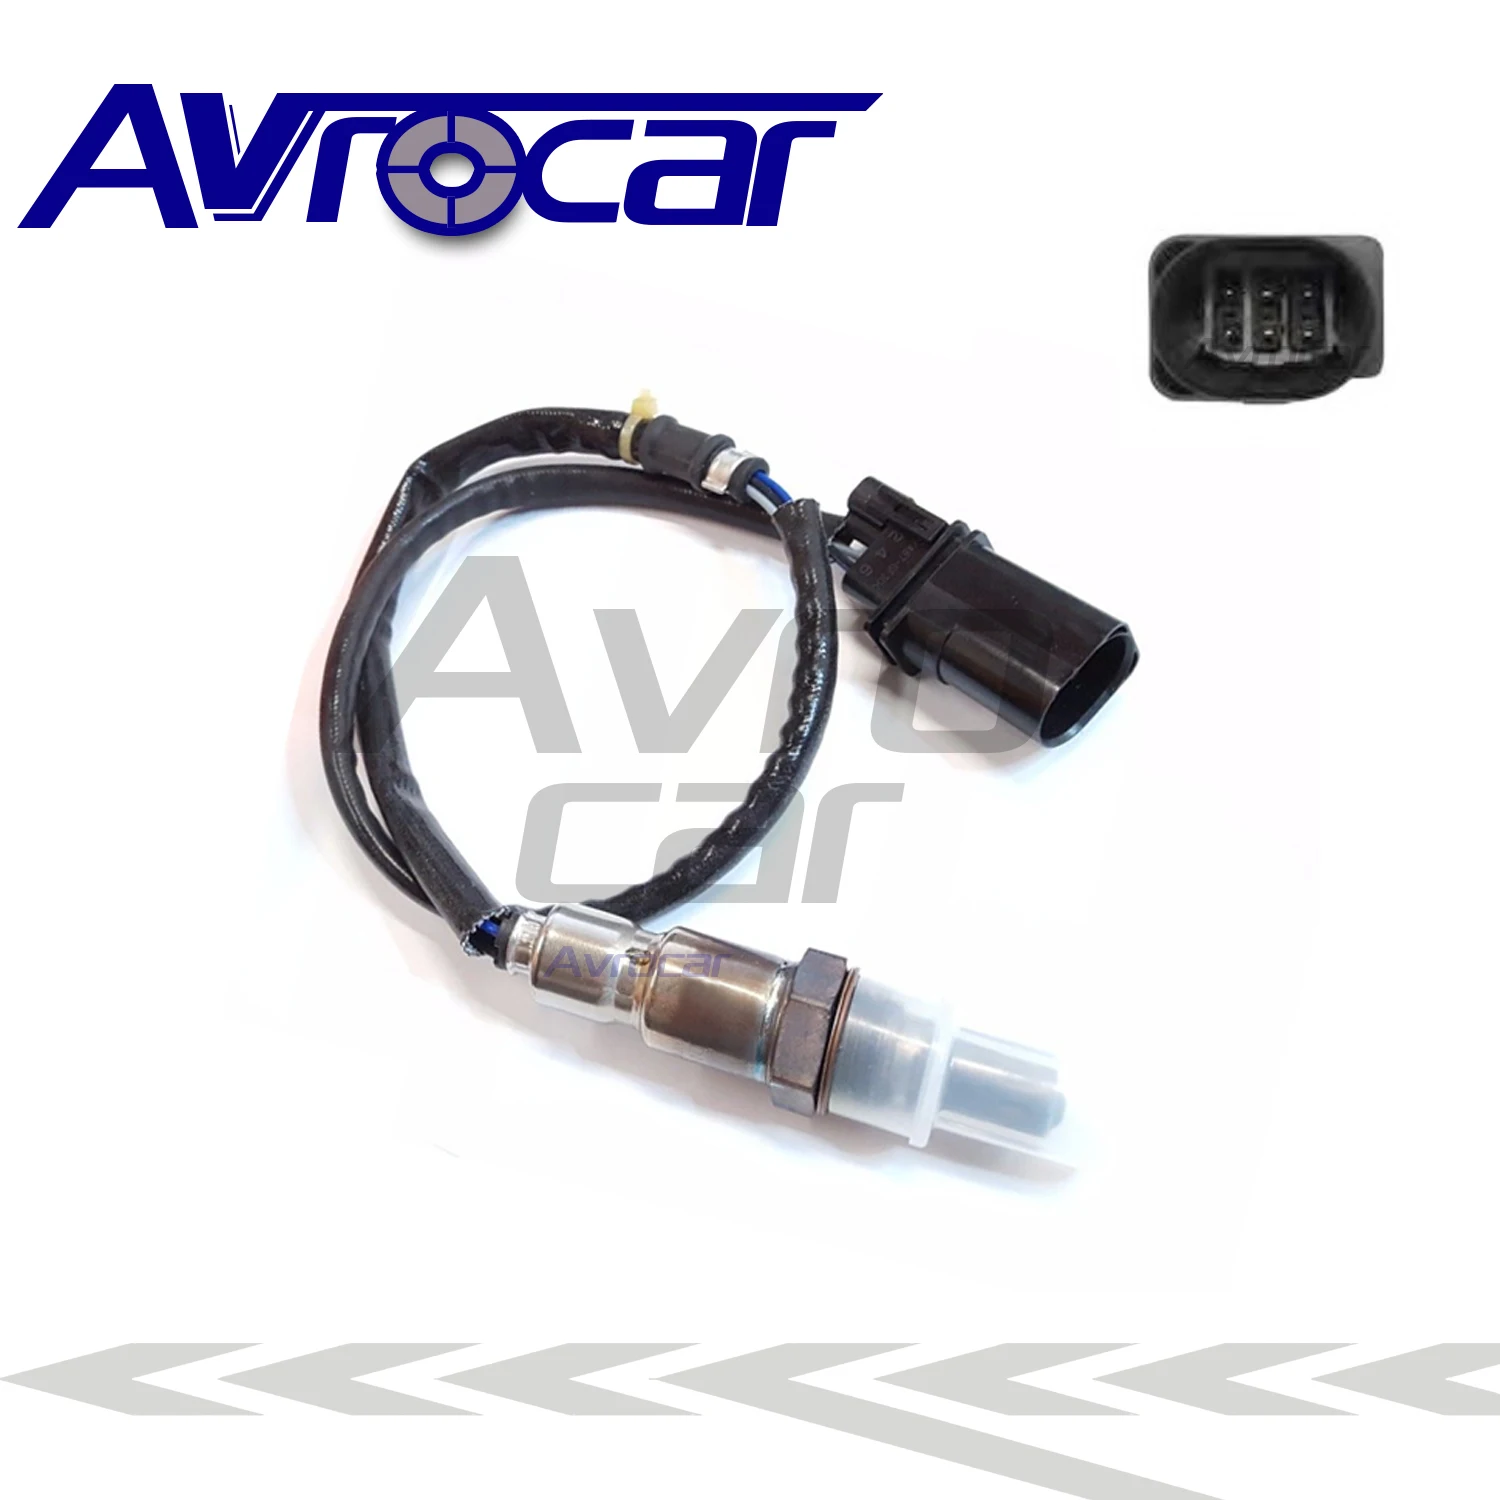 

AVROCAR O2 Oxygen Sensor Fit For AUDI A1 A3 SEAT SKODA VW 1.2L 03F906262 UAA0004VW004 2009-2014 Upstream Front Wideband Lambda